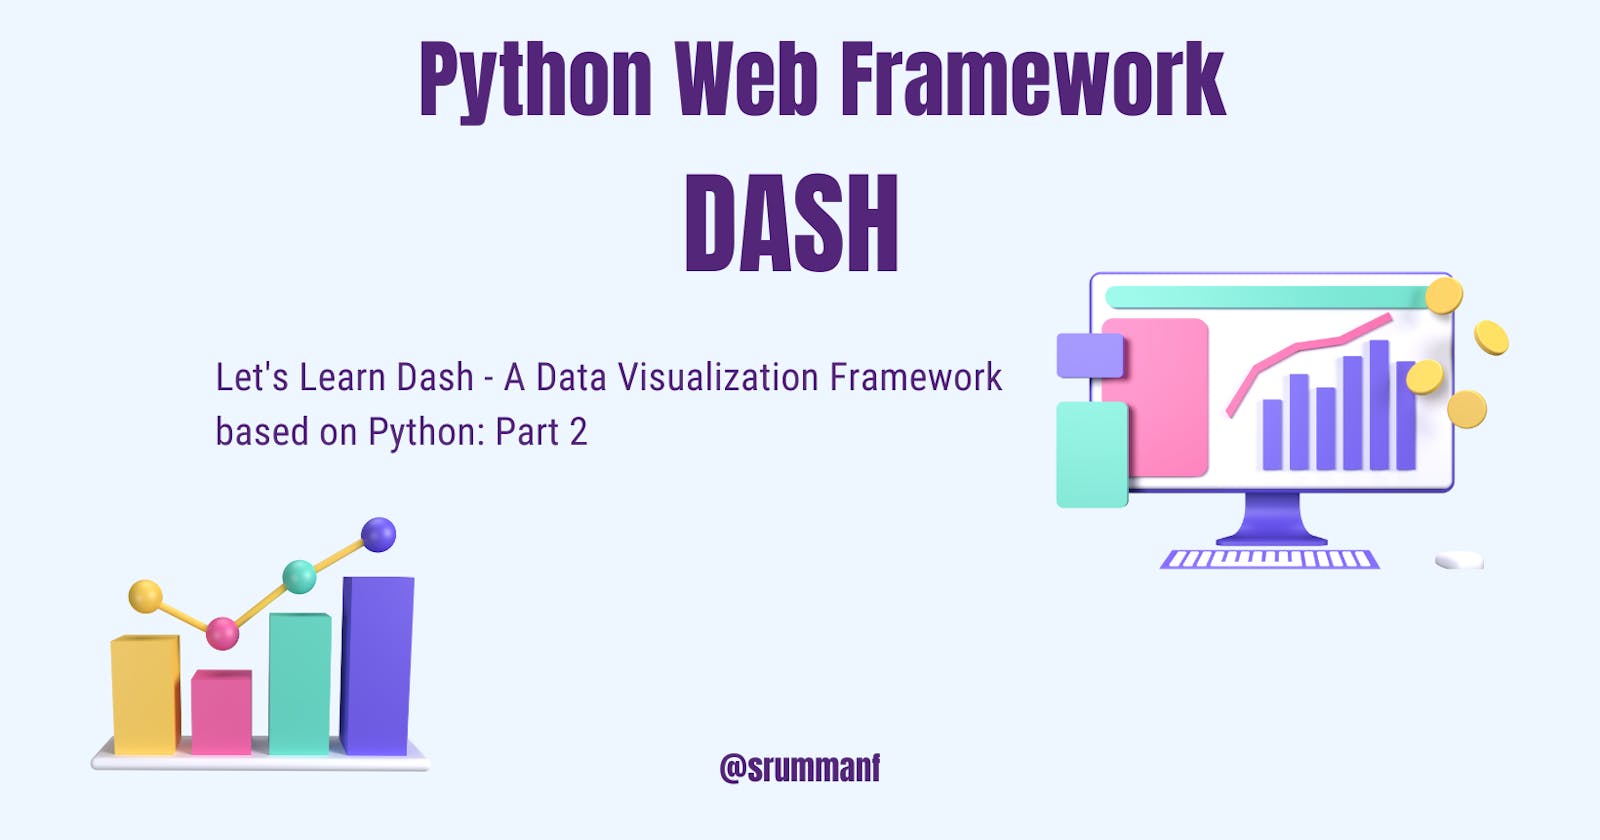 Let's Learn Dash - A Data Visualization Framework based on Python: Part 2